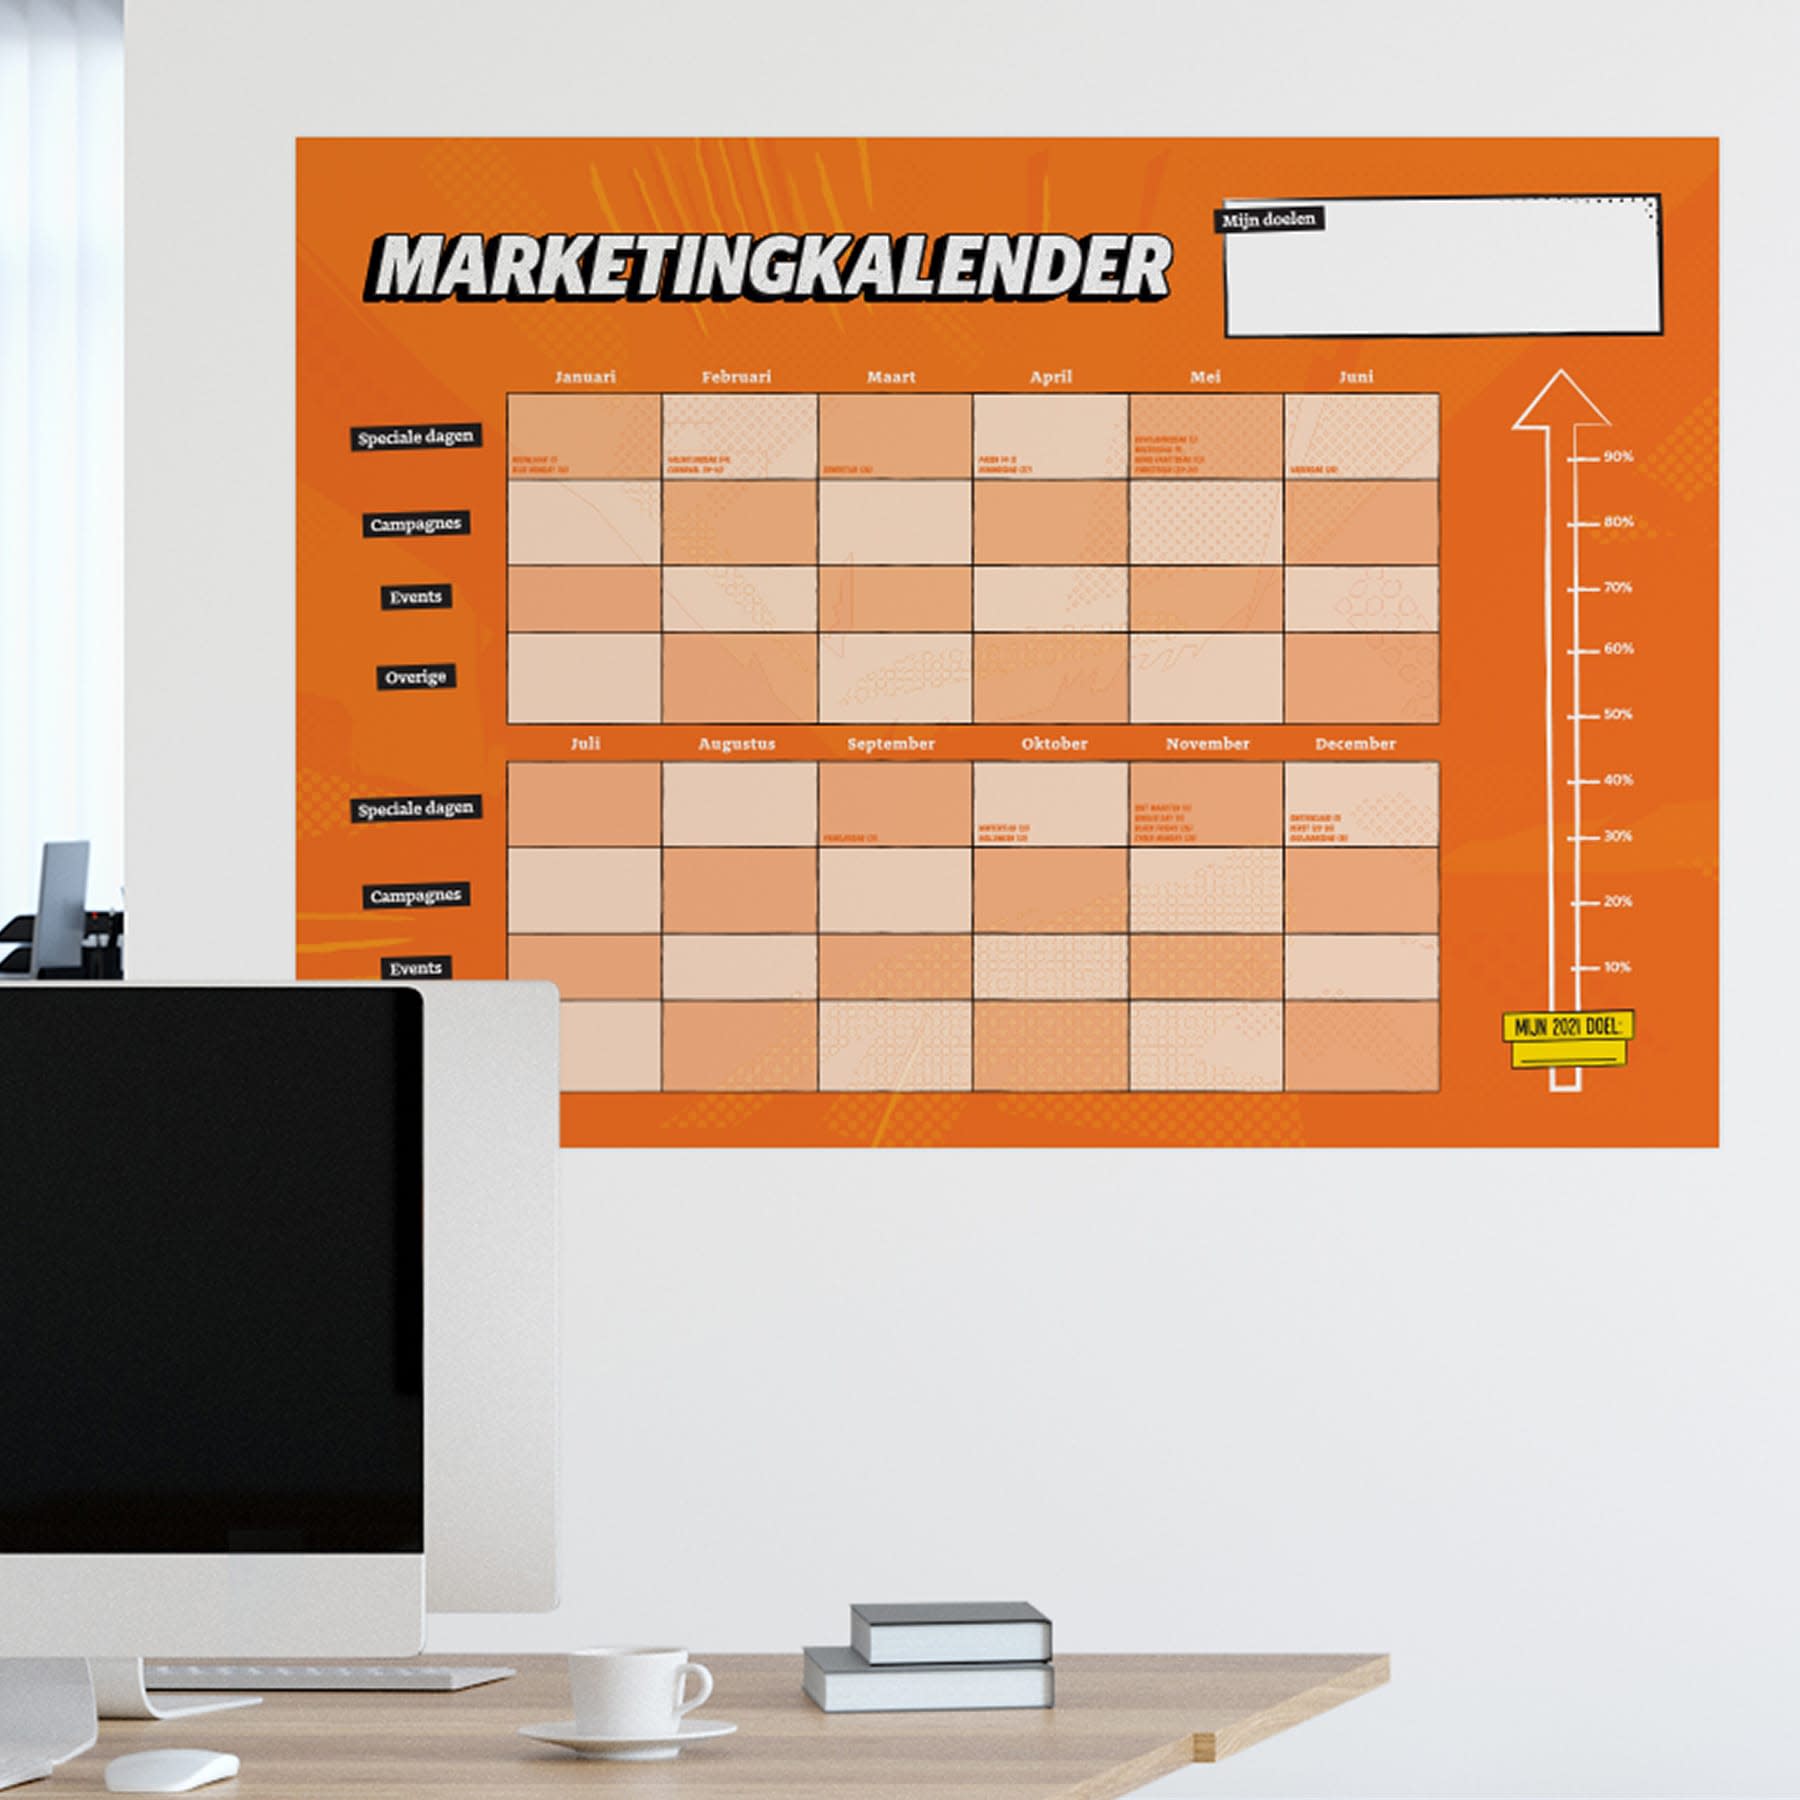 marketingkalender-poster